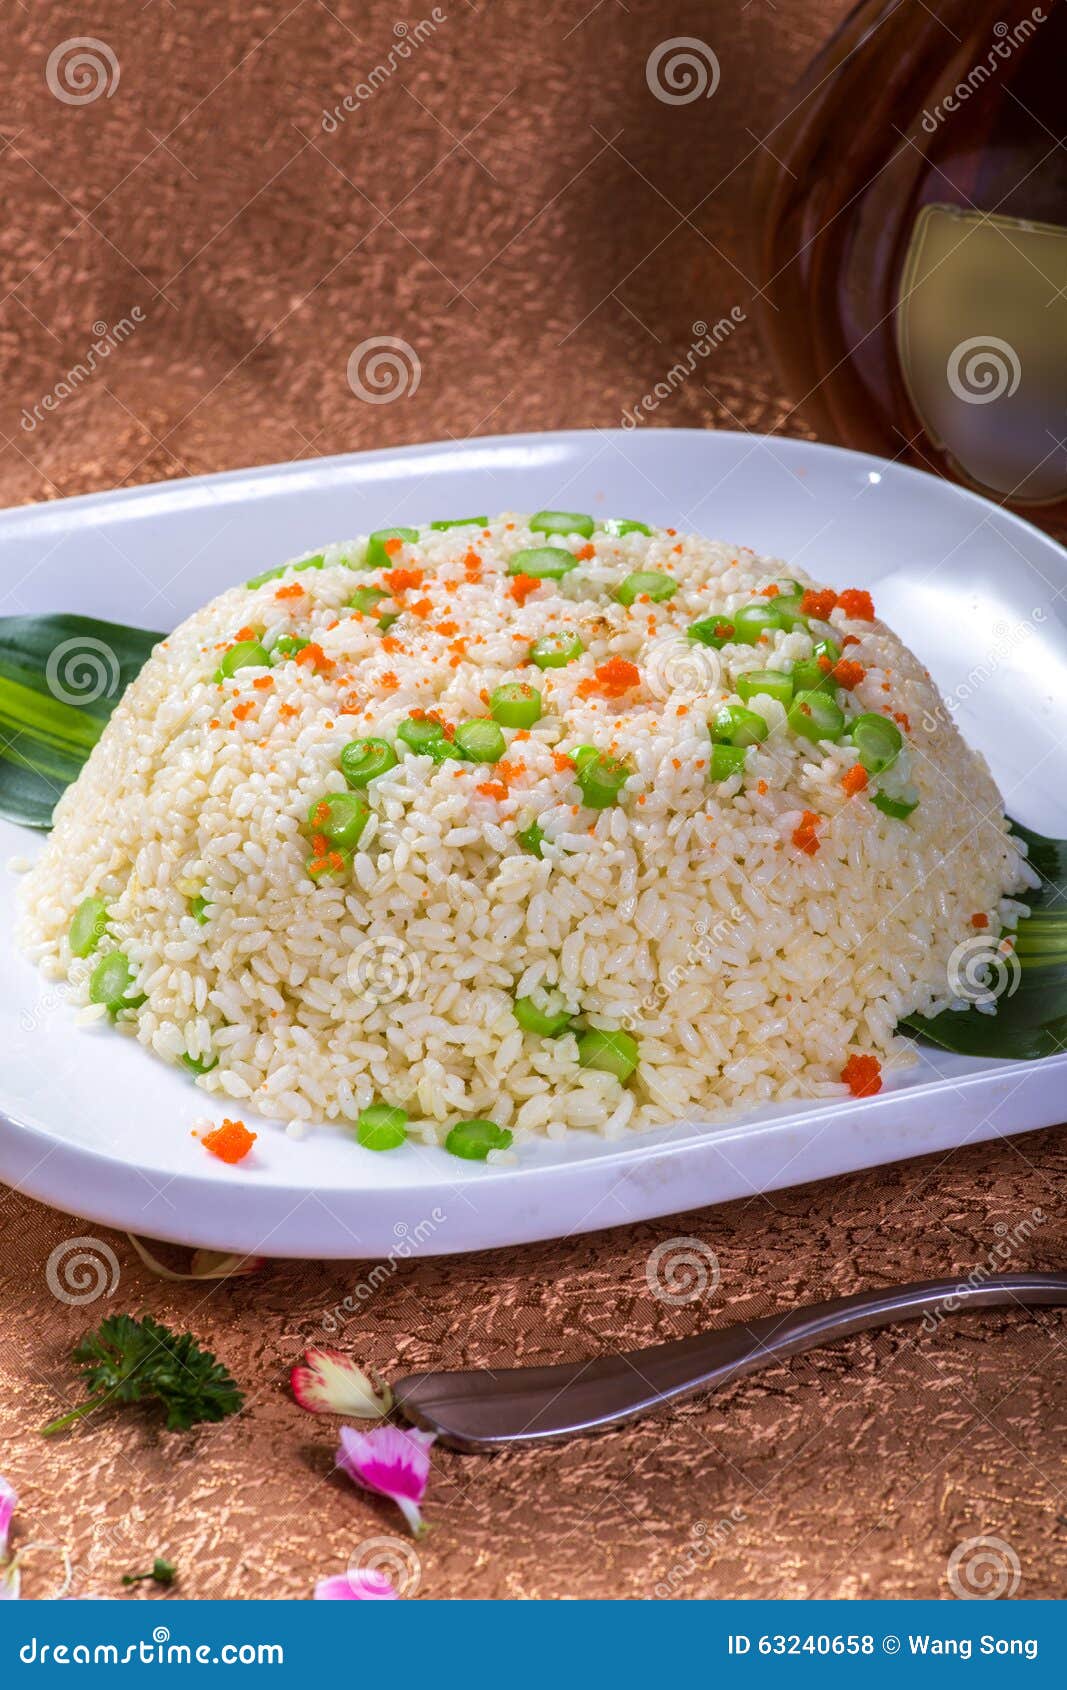 The yangzhou Fried rice stock photo. Image of rice, meat - 63240658